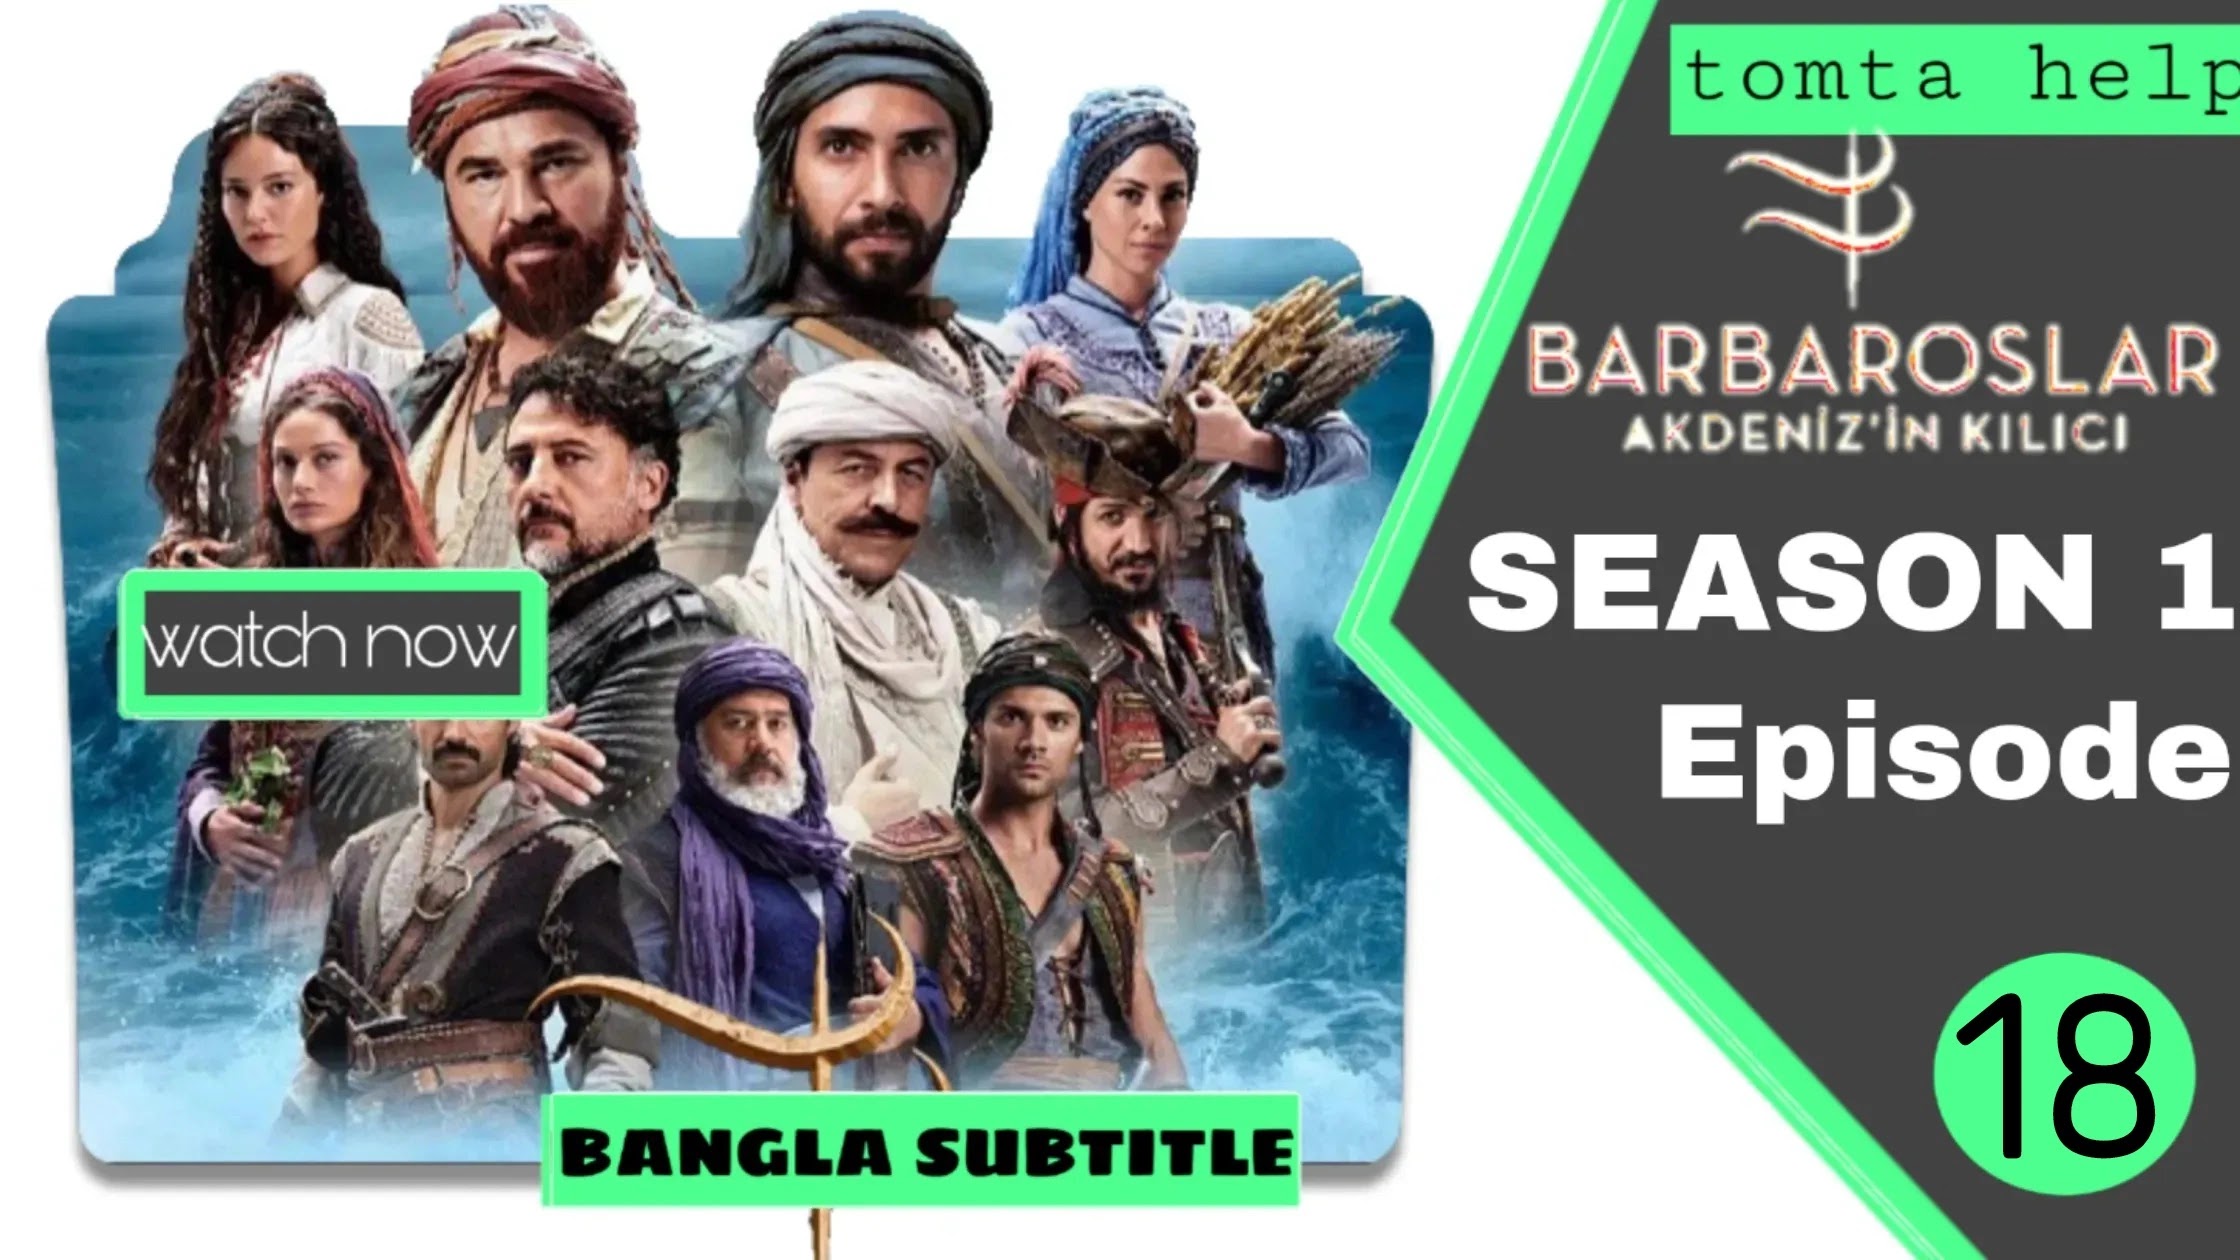 Barbaroslar Episode 18 Bangla Subtitle